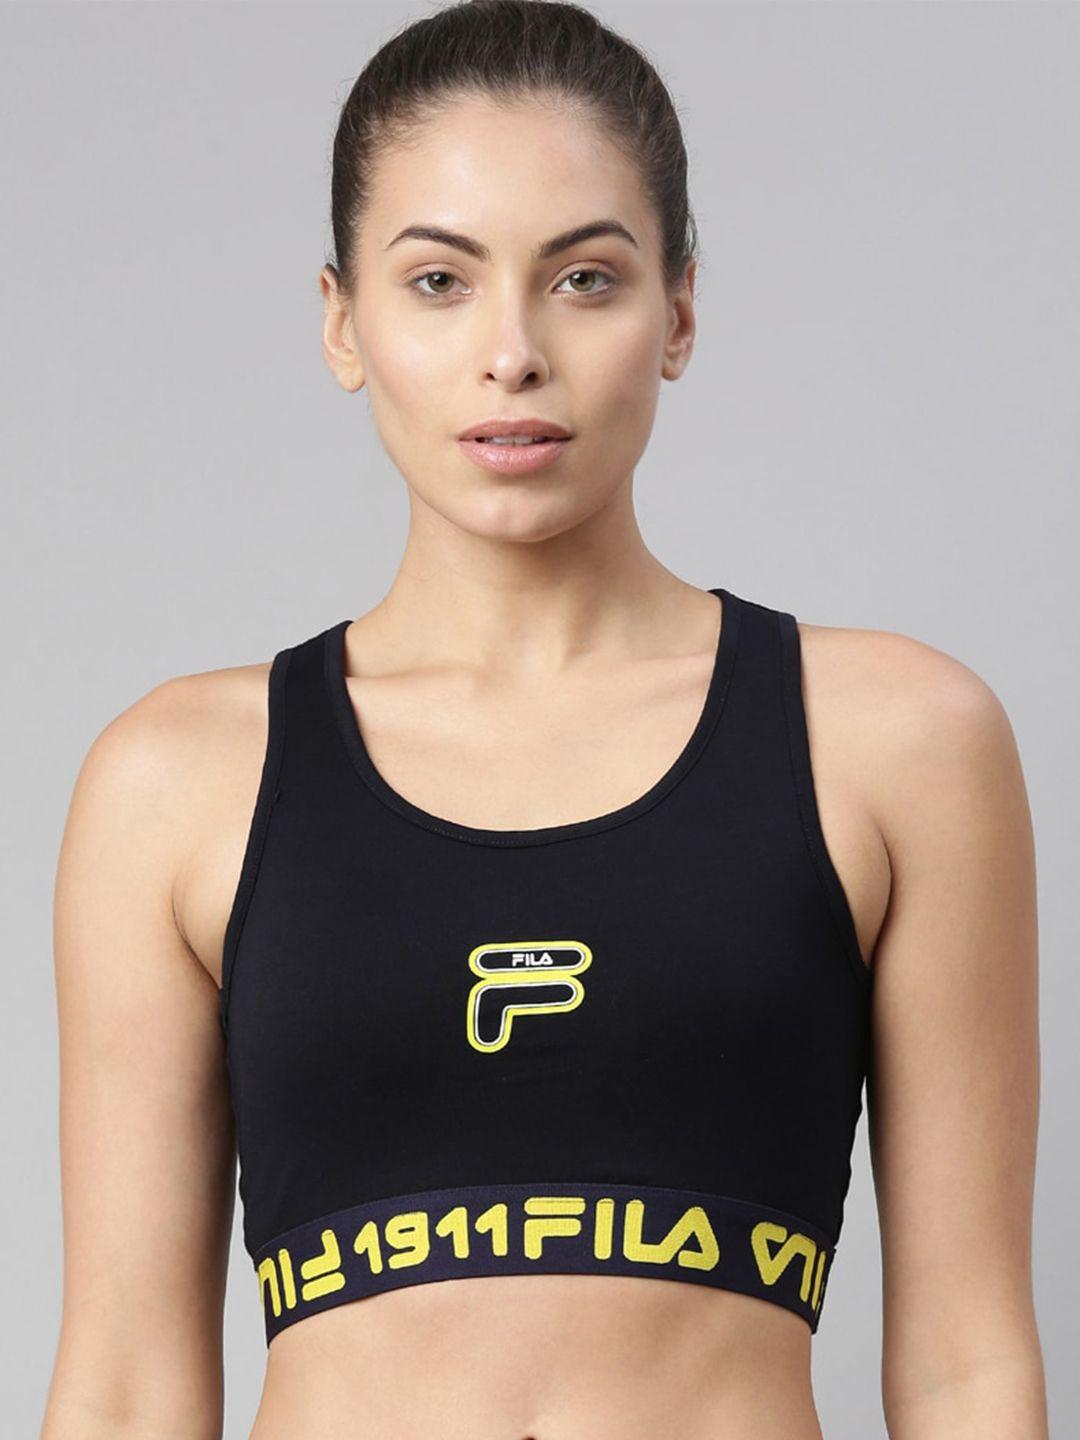 fila black & yellow printed workout bra - wireless